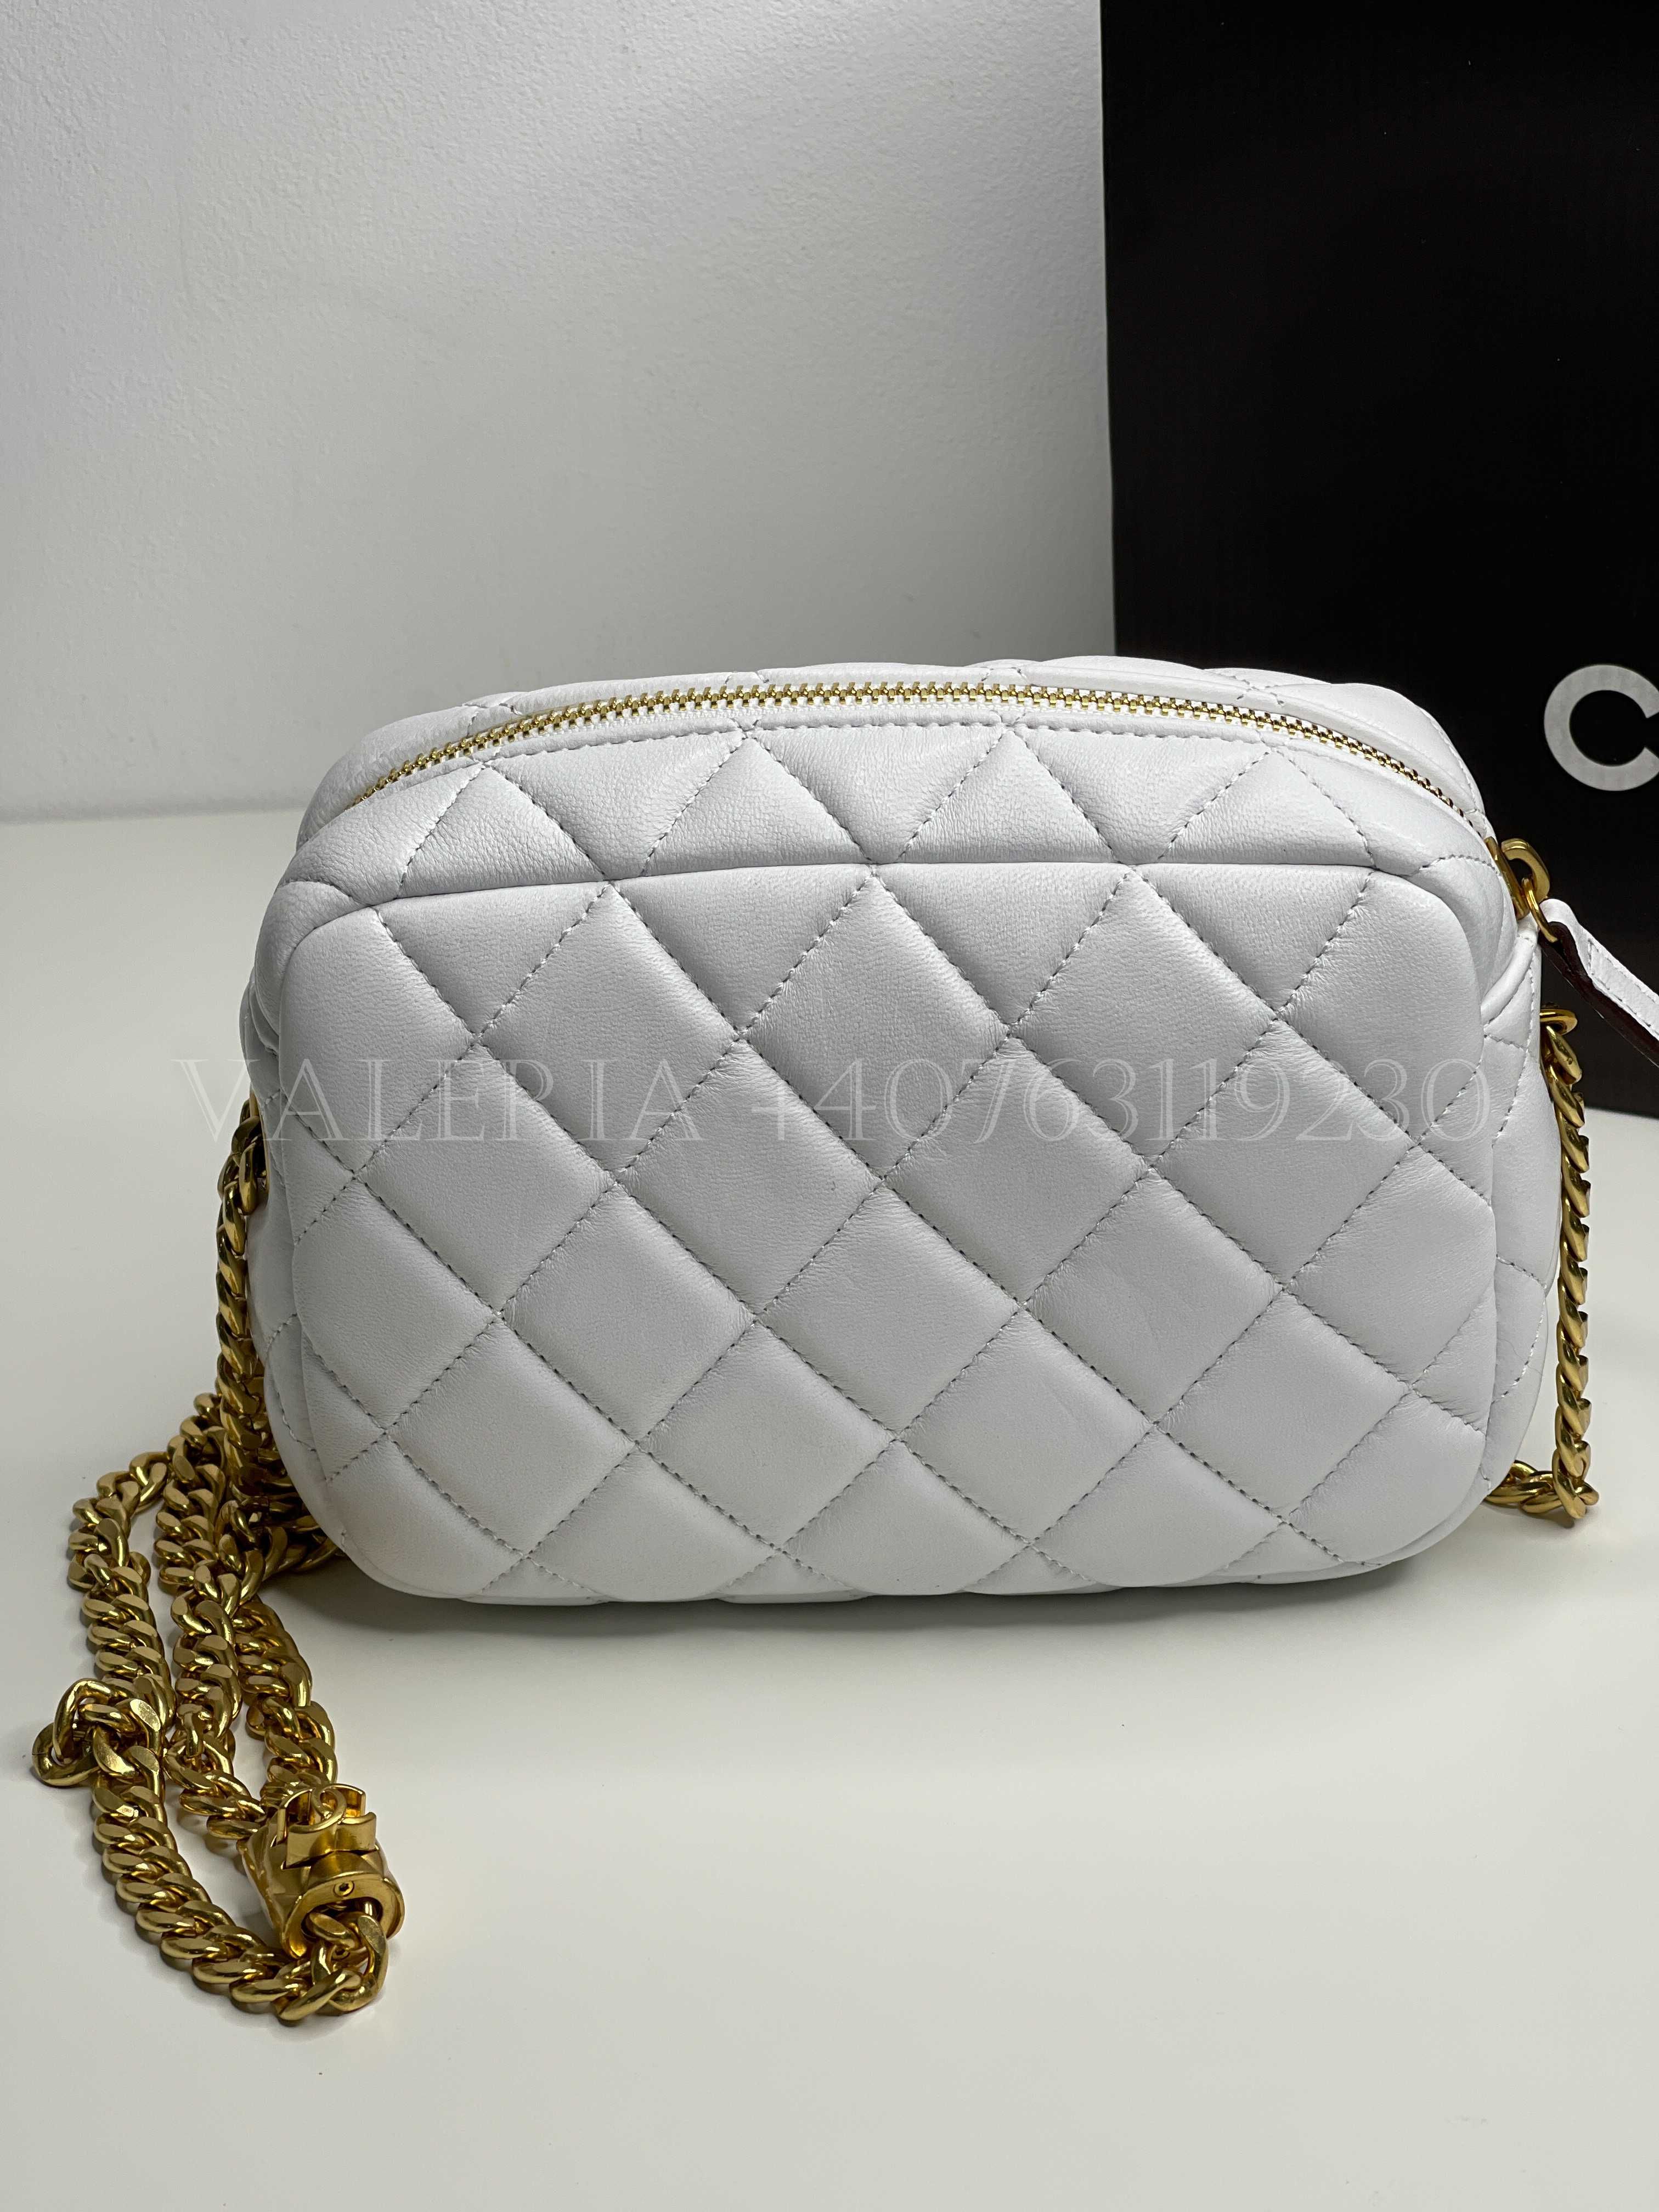 Geanta Chanel Camera Case White Leather